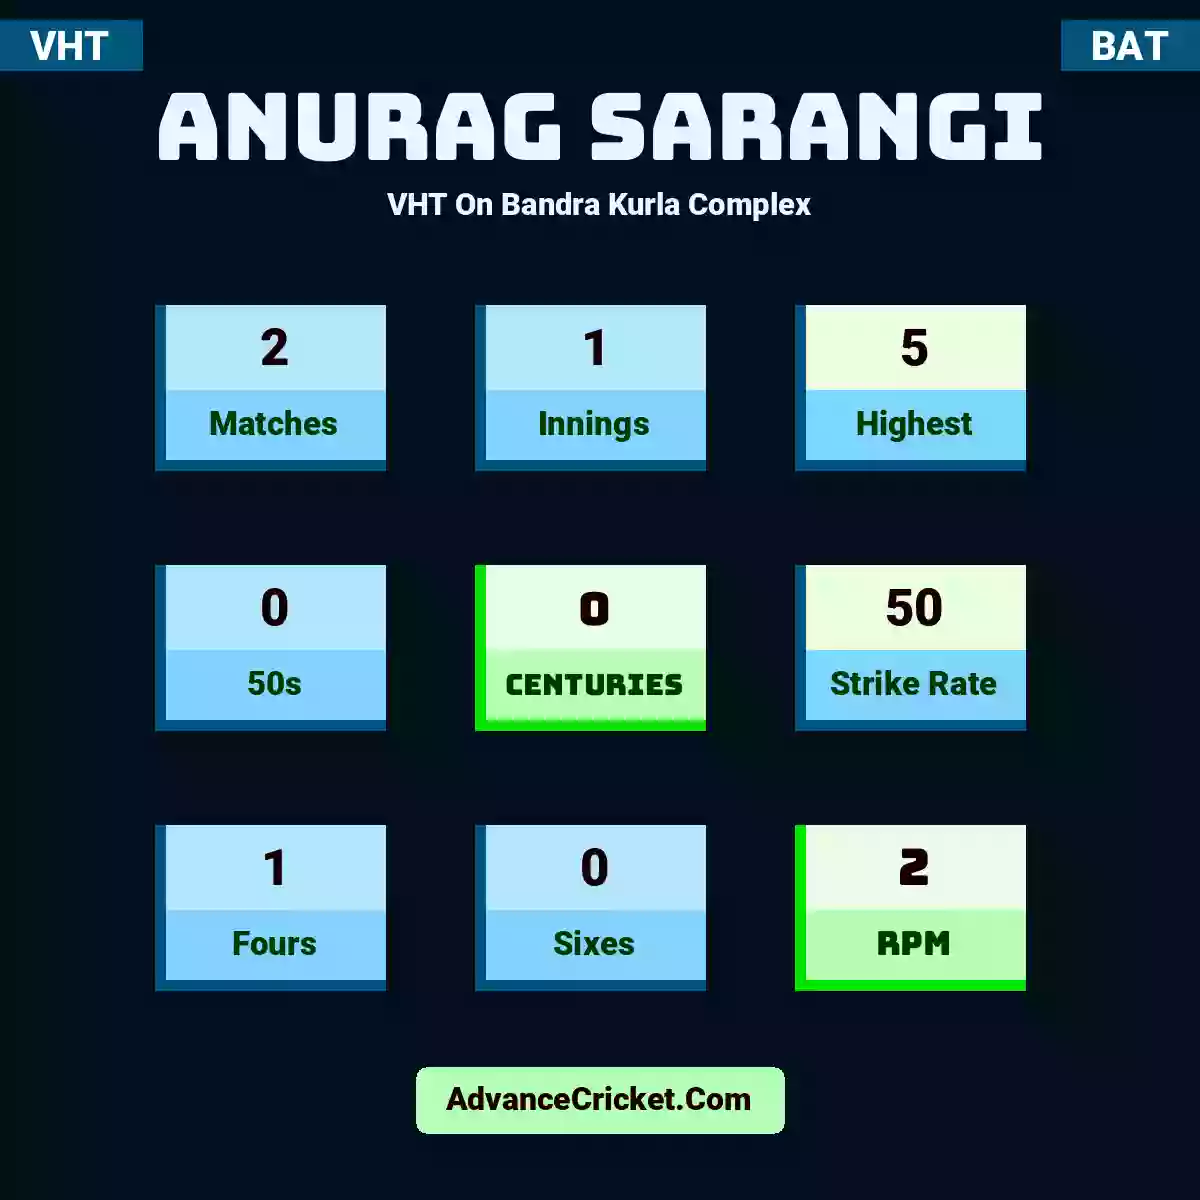 Anurag Sarangi VHT  On Bandra Kurla Complex, Anurag Sarangi played 2 matches, scored 5 runs as highest, 0 half-centuries, and 0 centuries, with a strike rate of 50. A.Sarangi hit 1 fours and 0 sixes, with an RPM of 2.